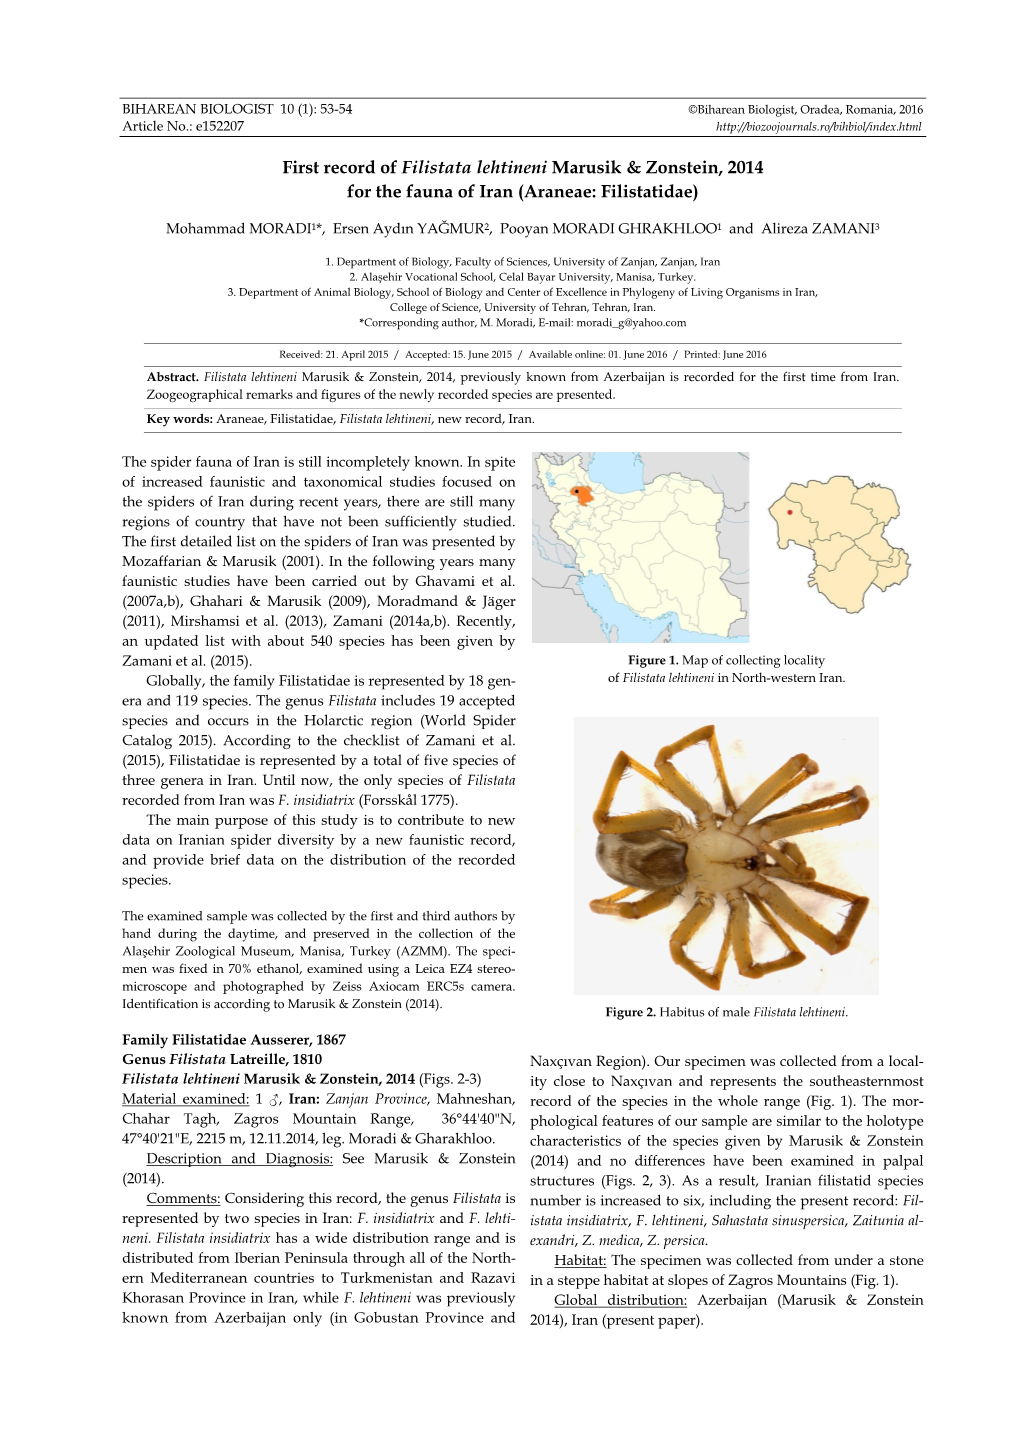 First Record of Filistata Lehtineni Marusik & Zonstein, 2014 for the Fauna of Iran (Araneae: Filistatidae)